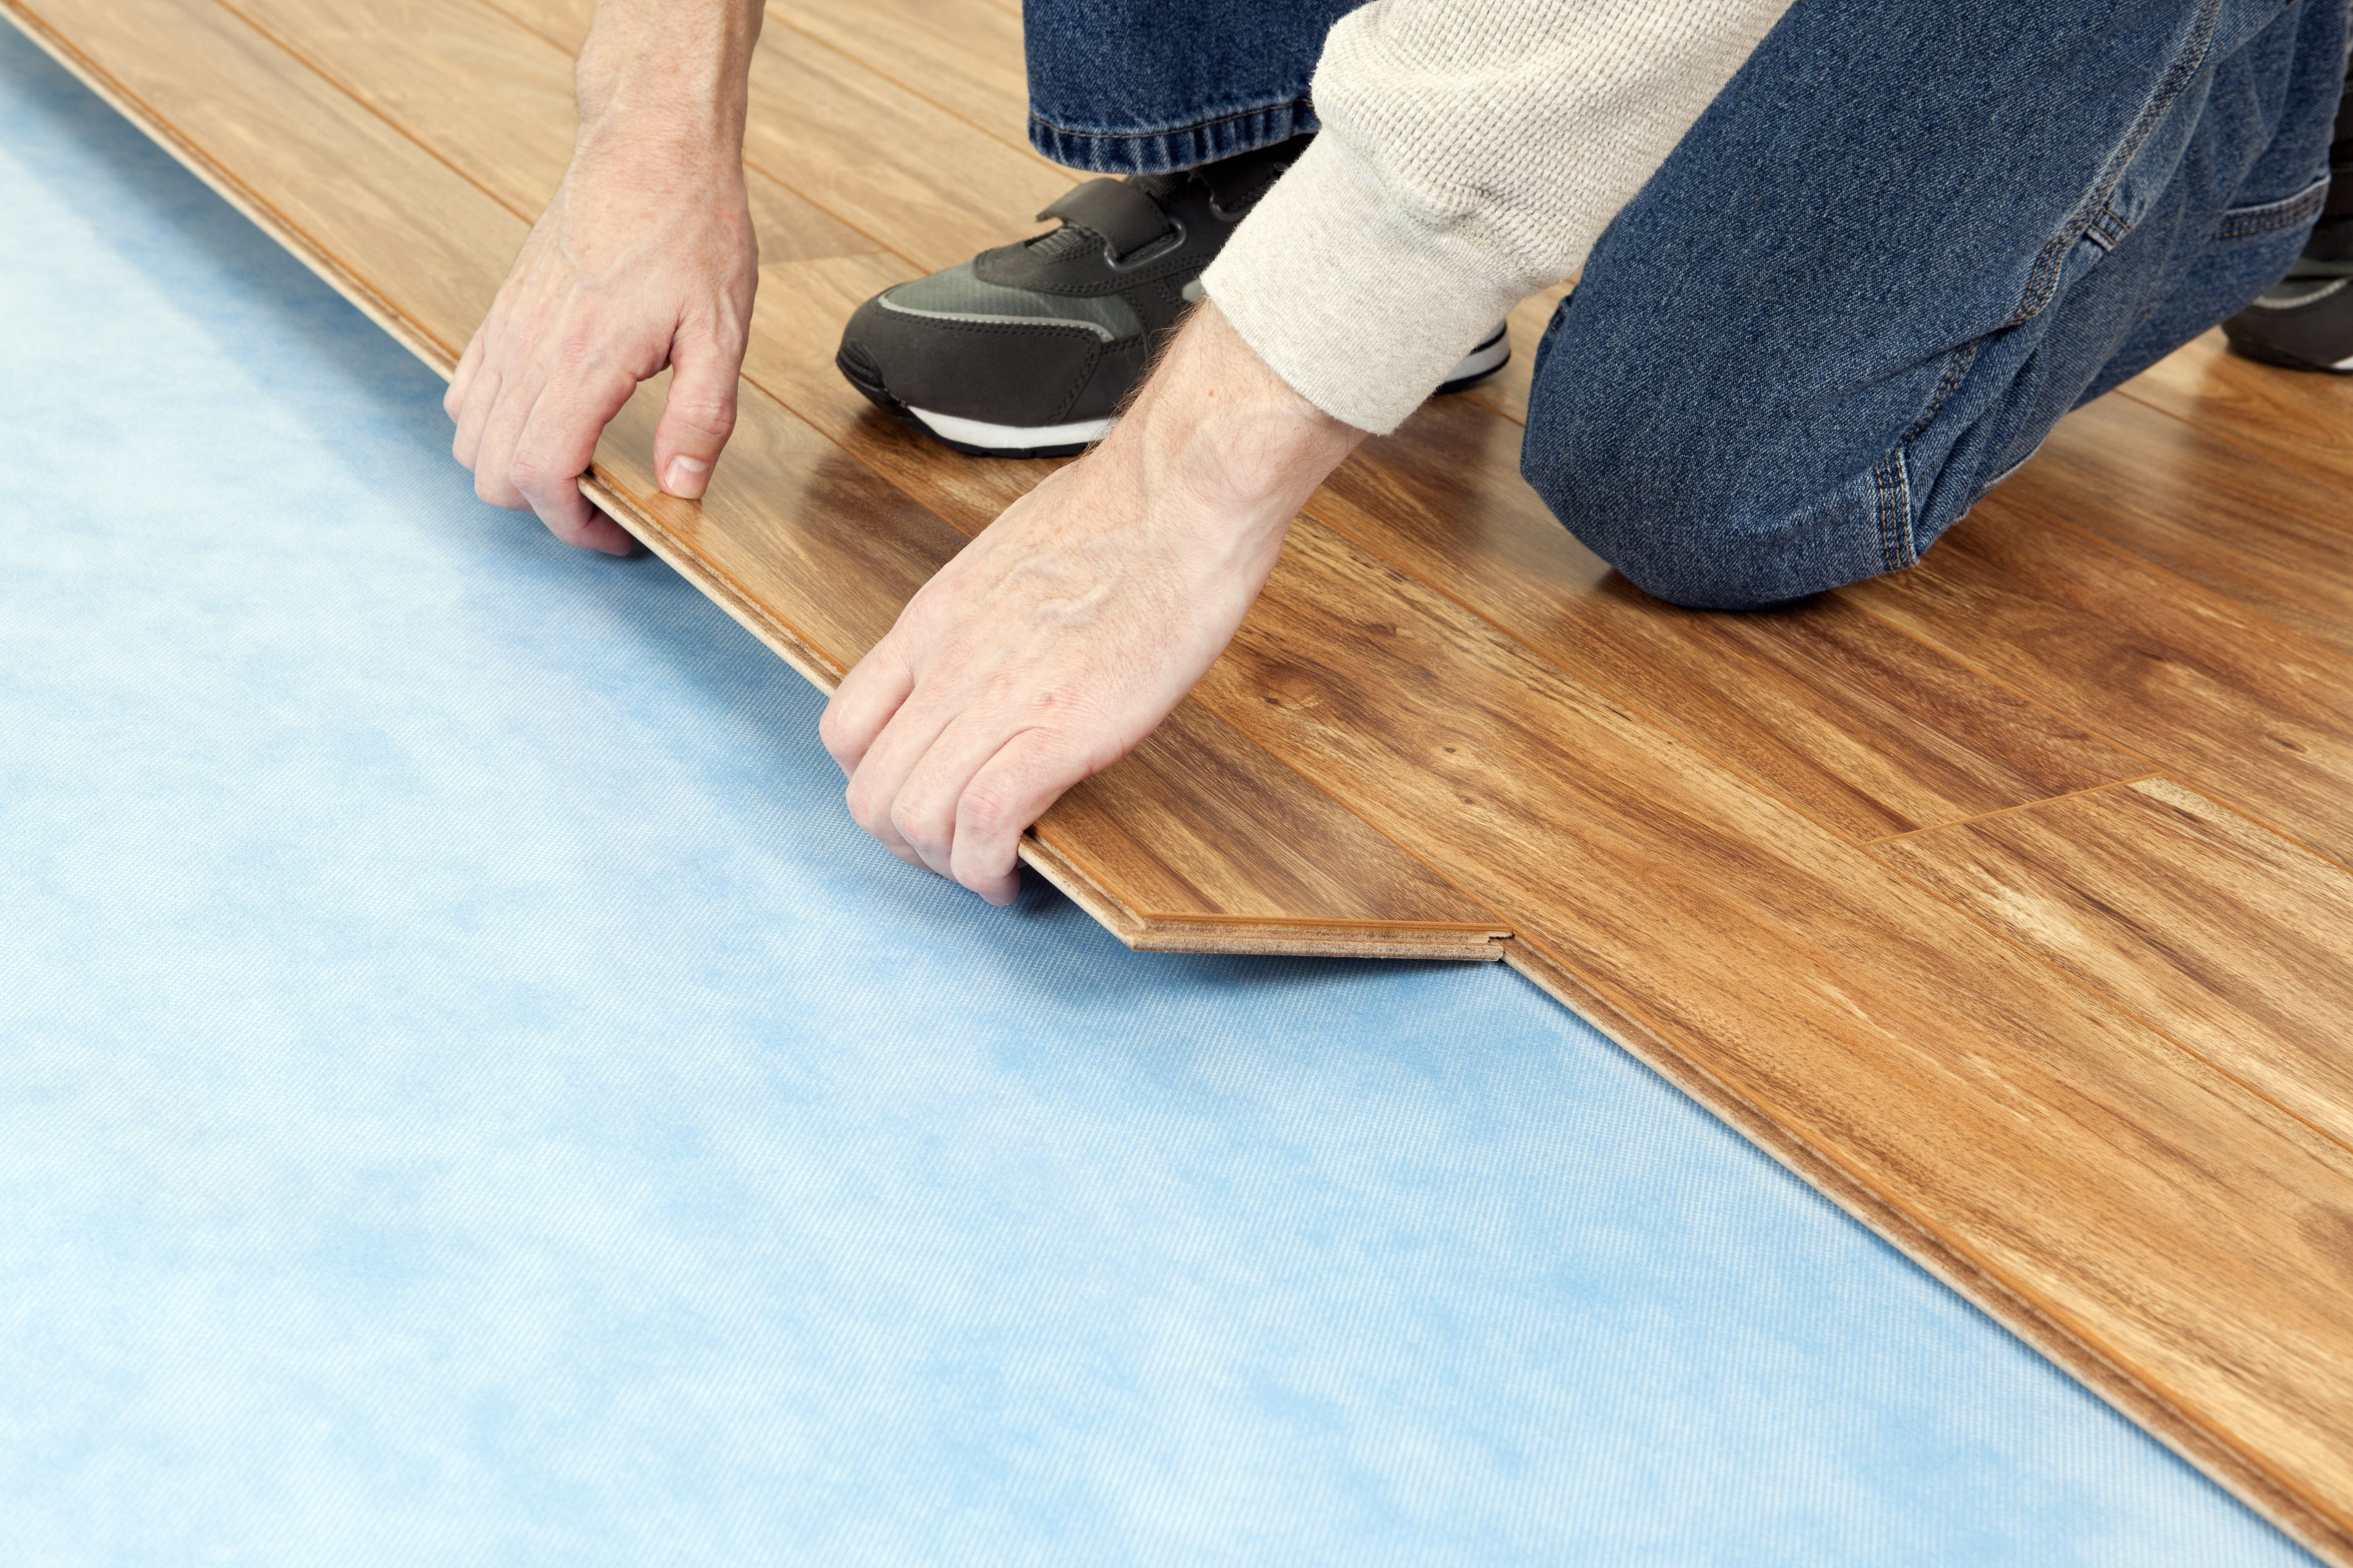 Hardwood Floor Vapor Barrier Of Flooring Underlayment the Basics Intended for New Floor Installation 185270632 582b722c3df78c6f6af0a8ab